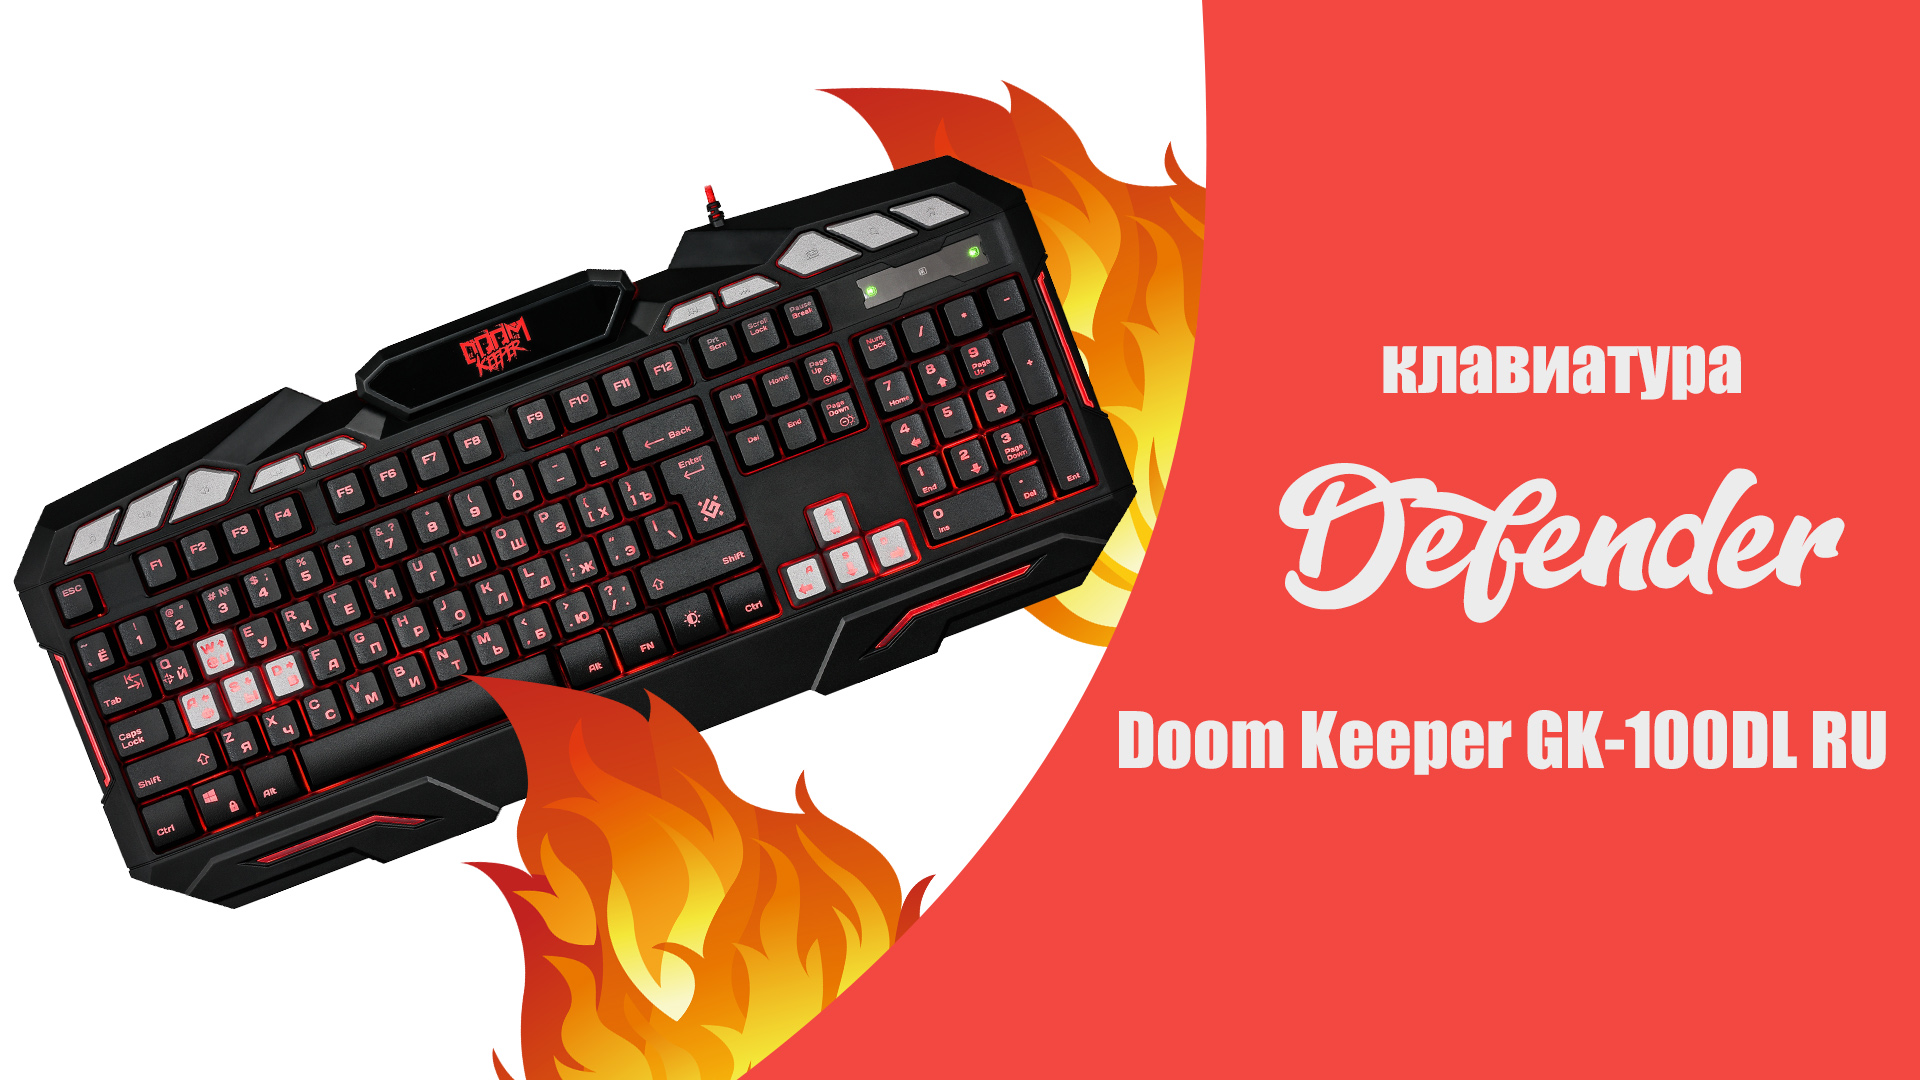 Defender doom keeper. Клавиатура Doom Keeper GK-100dl. Клавиатура Defender Doom Keeper. Defender Doom Keeper GK-100dl. Клавиатура DEXP GK 100.